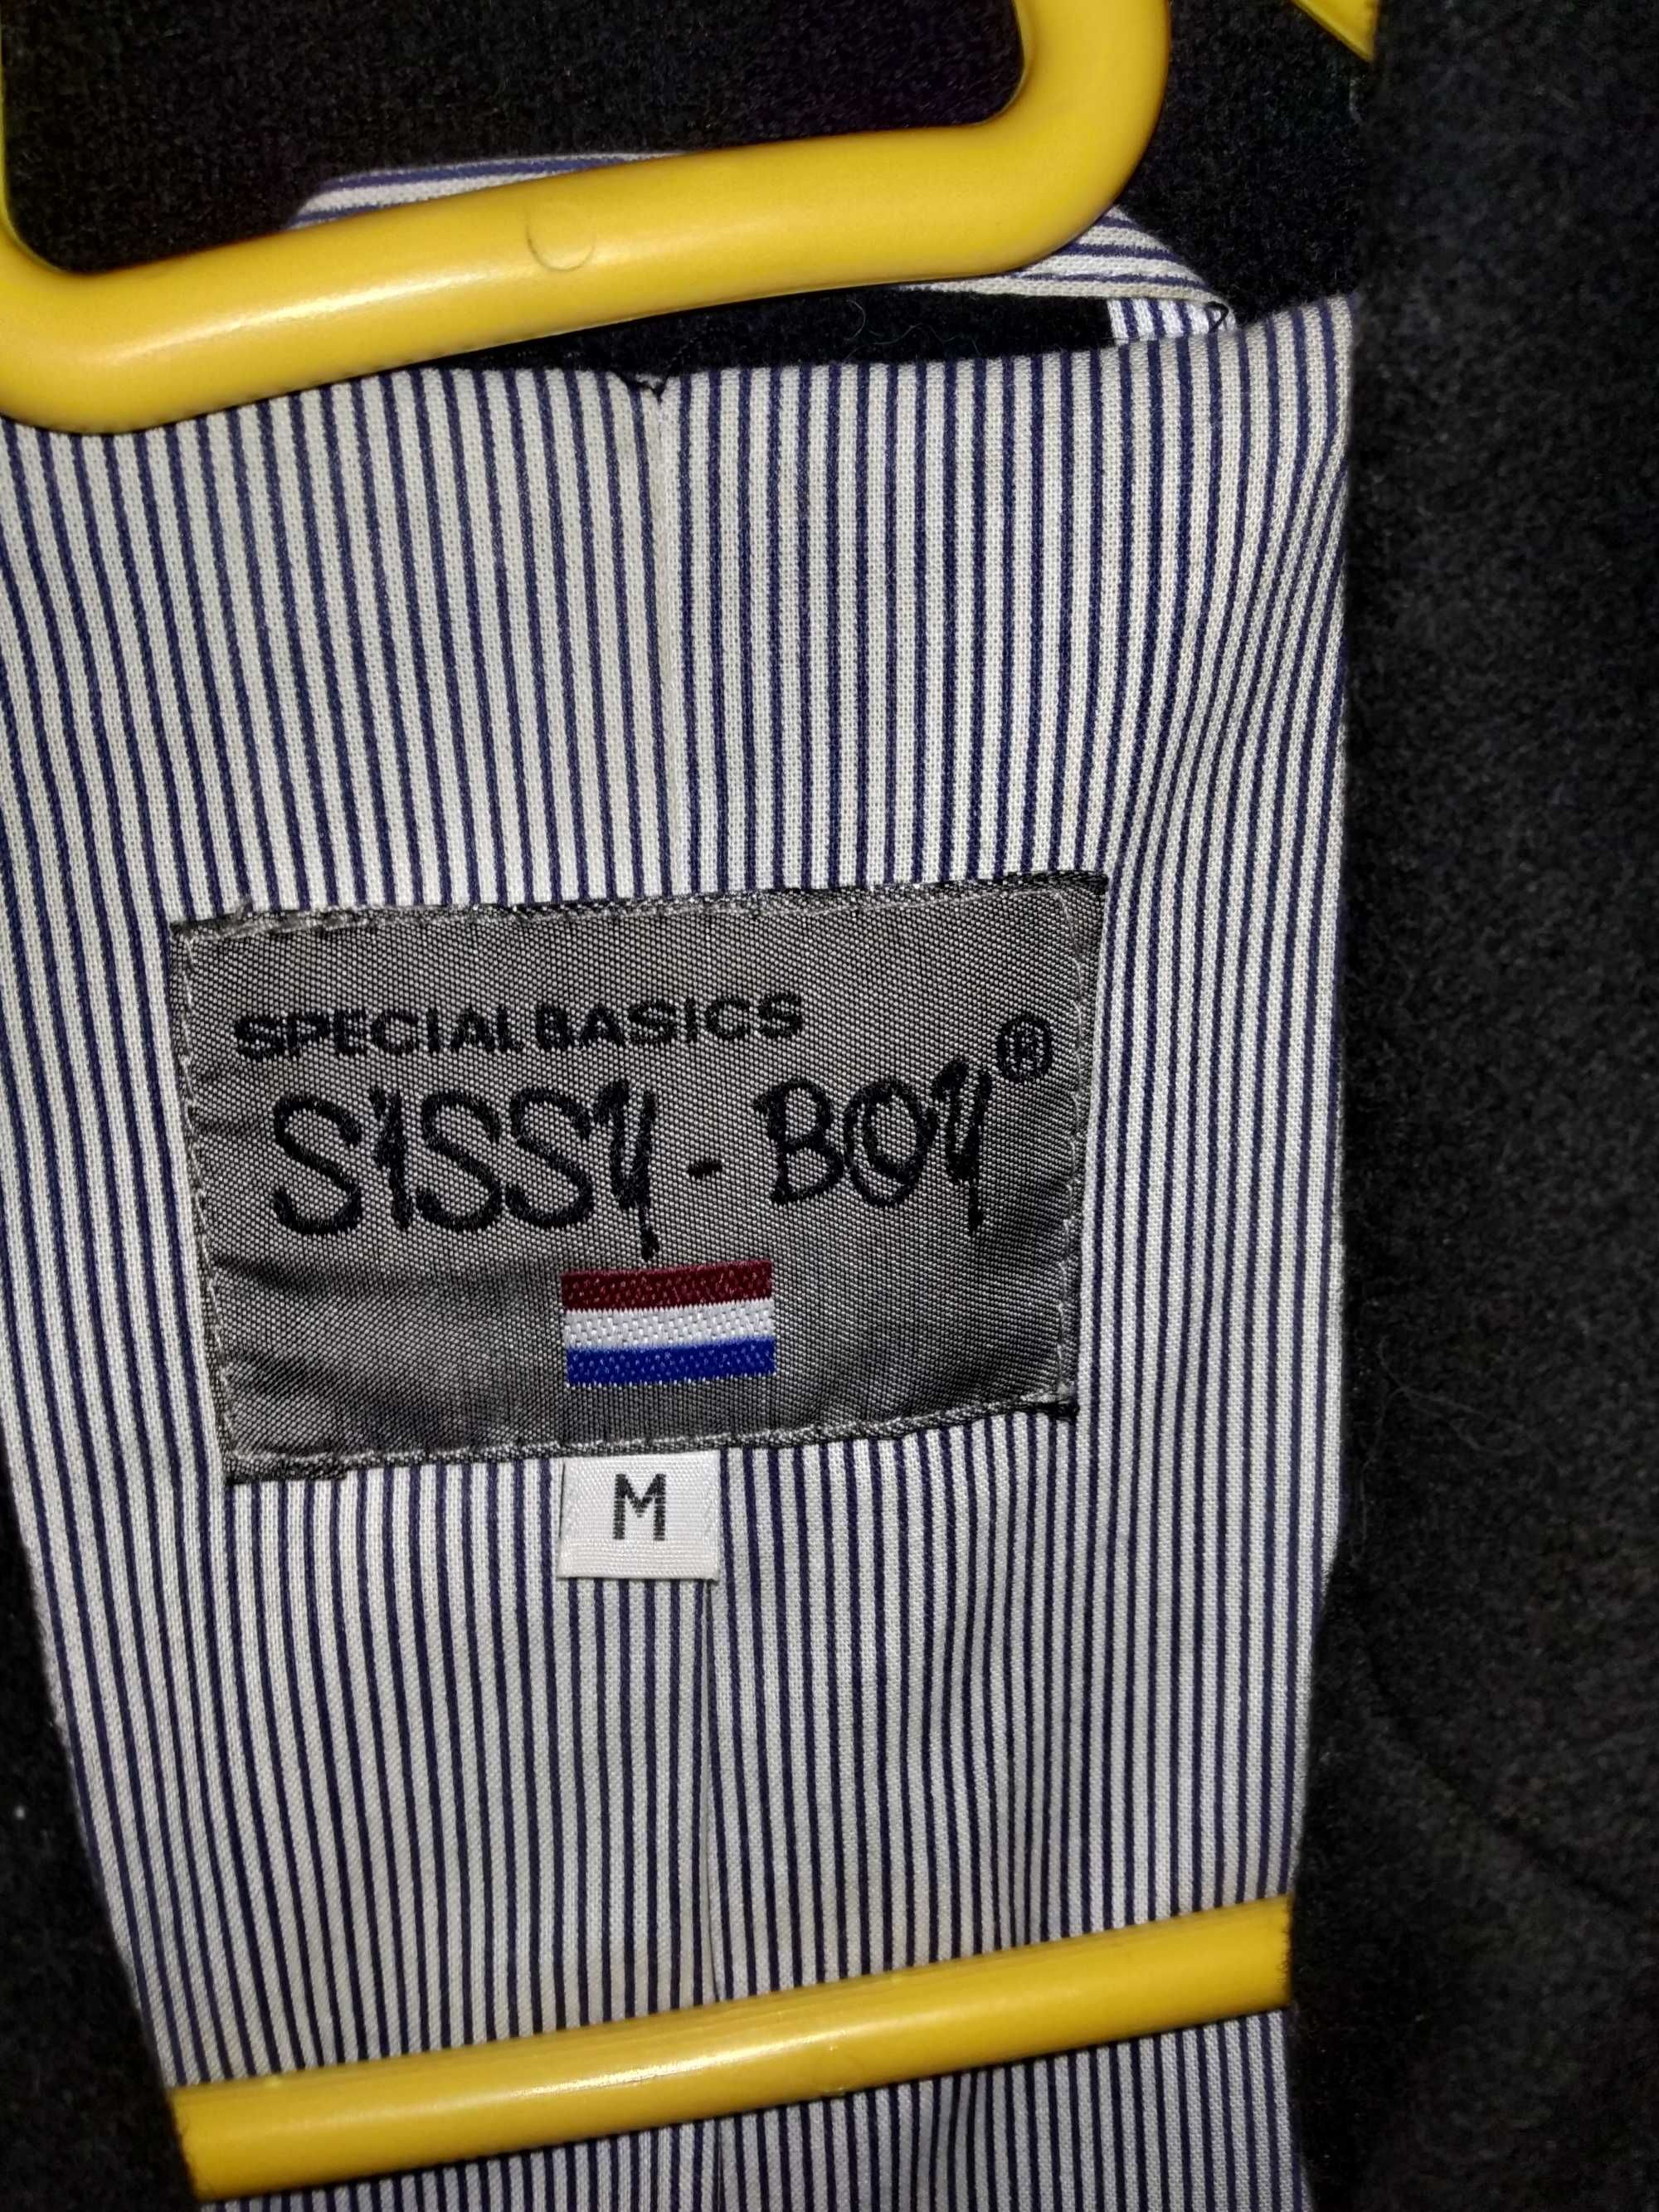 Пальто шерстяное унисекс M Sissy boy Нидерланды